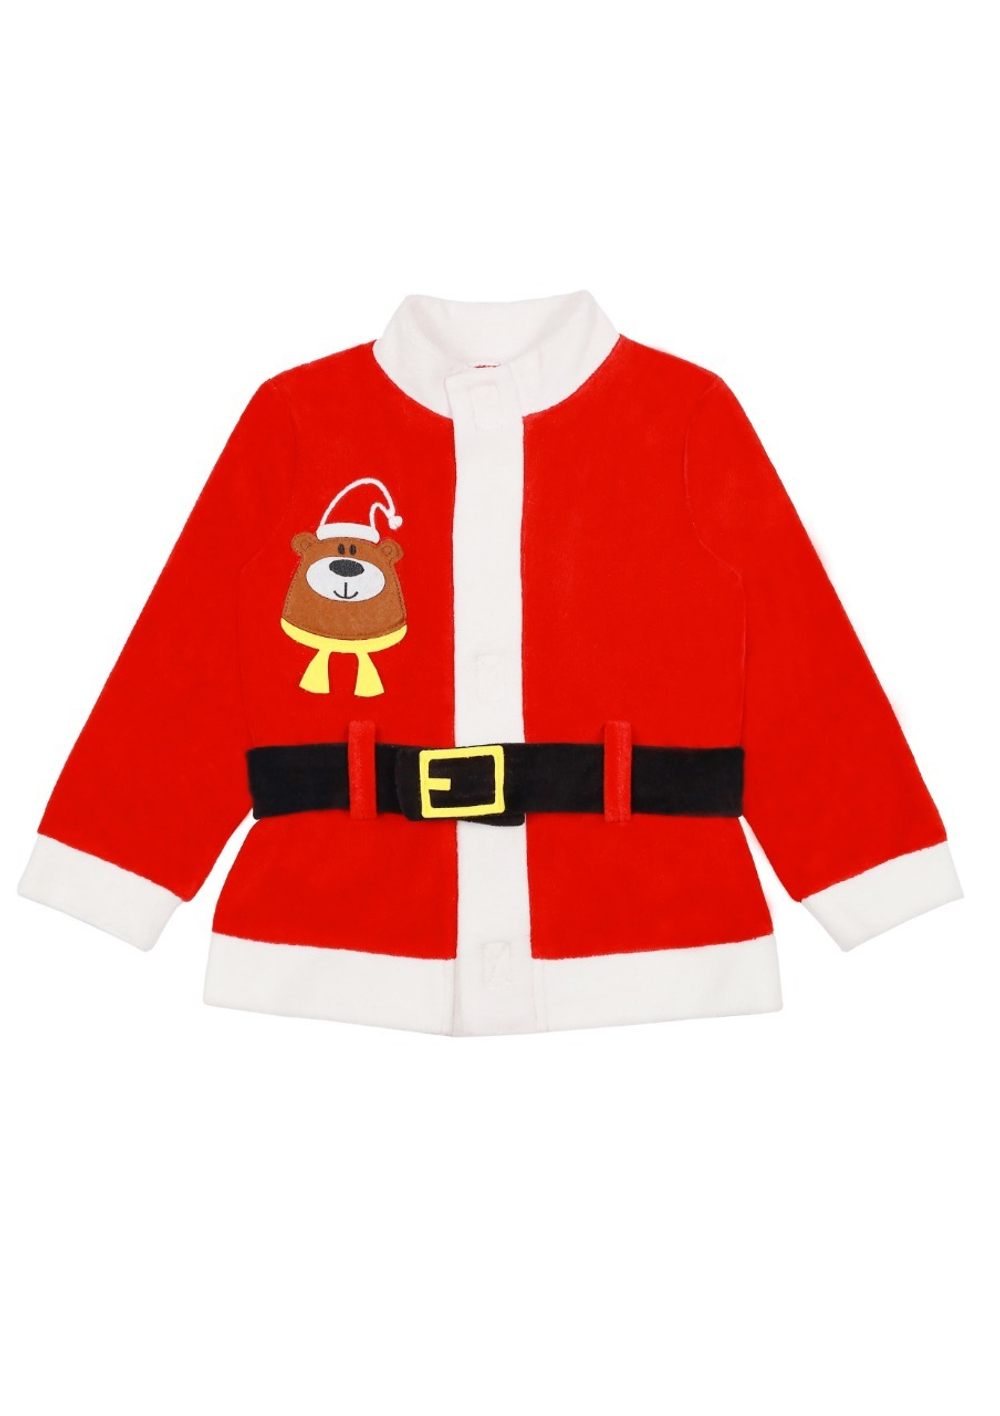 Новогодний костюм Деда Мороза для мальчика